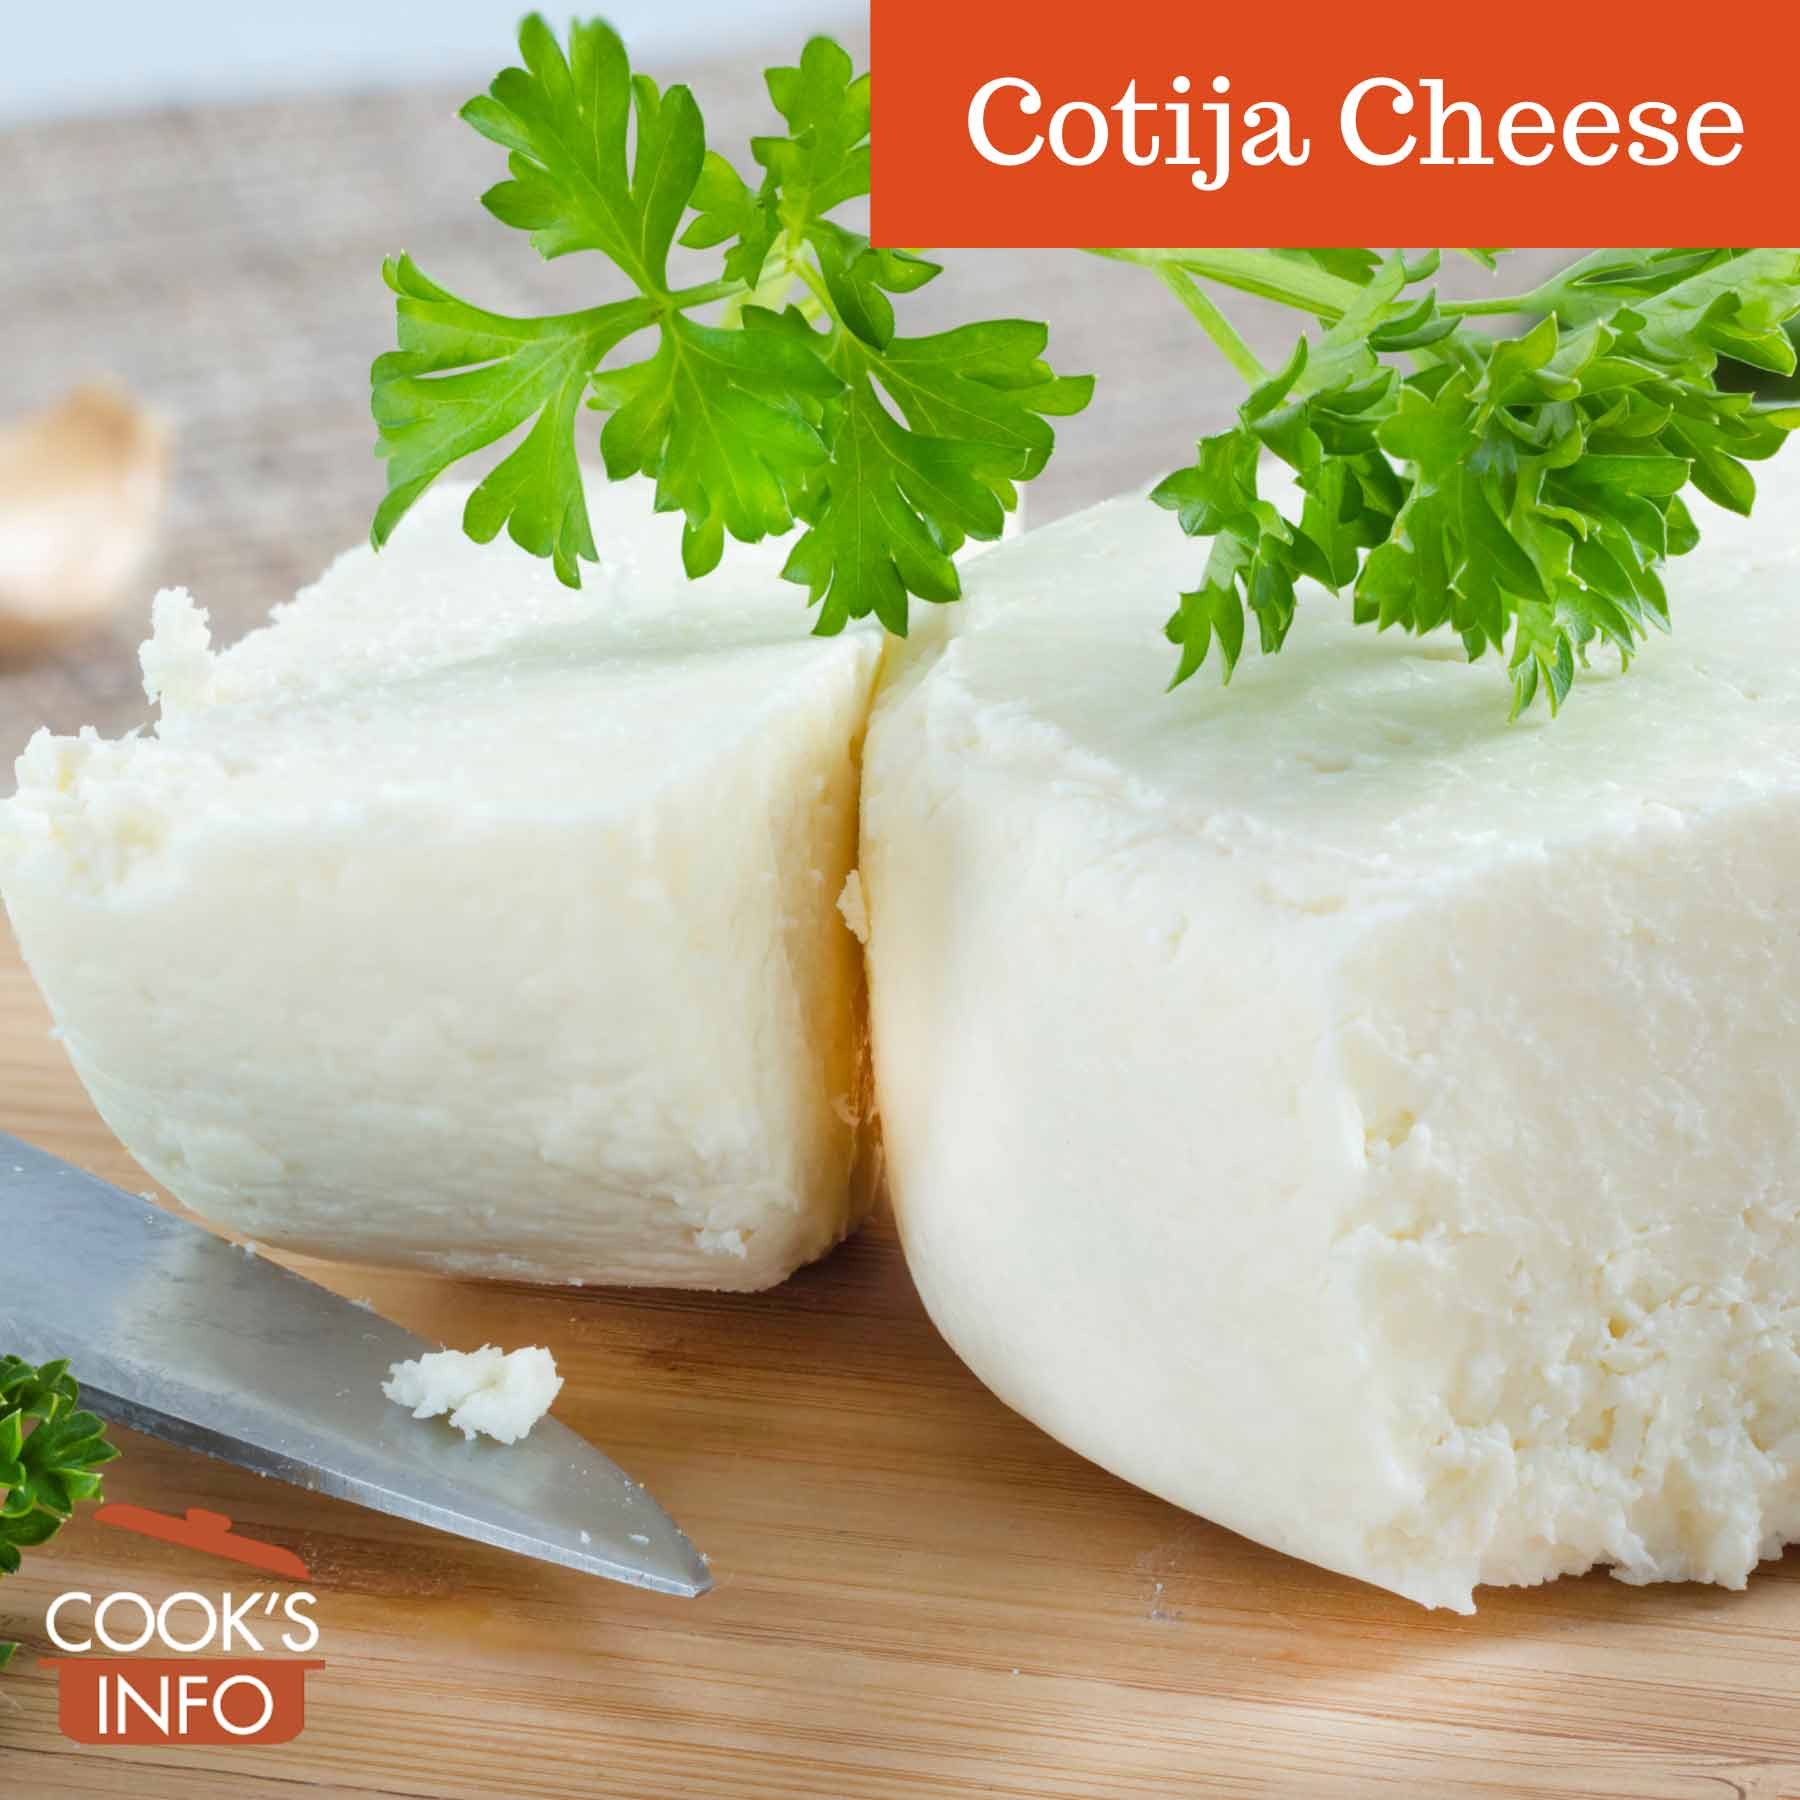 Cotija Cheese wedges